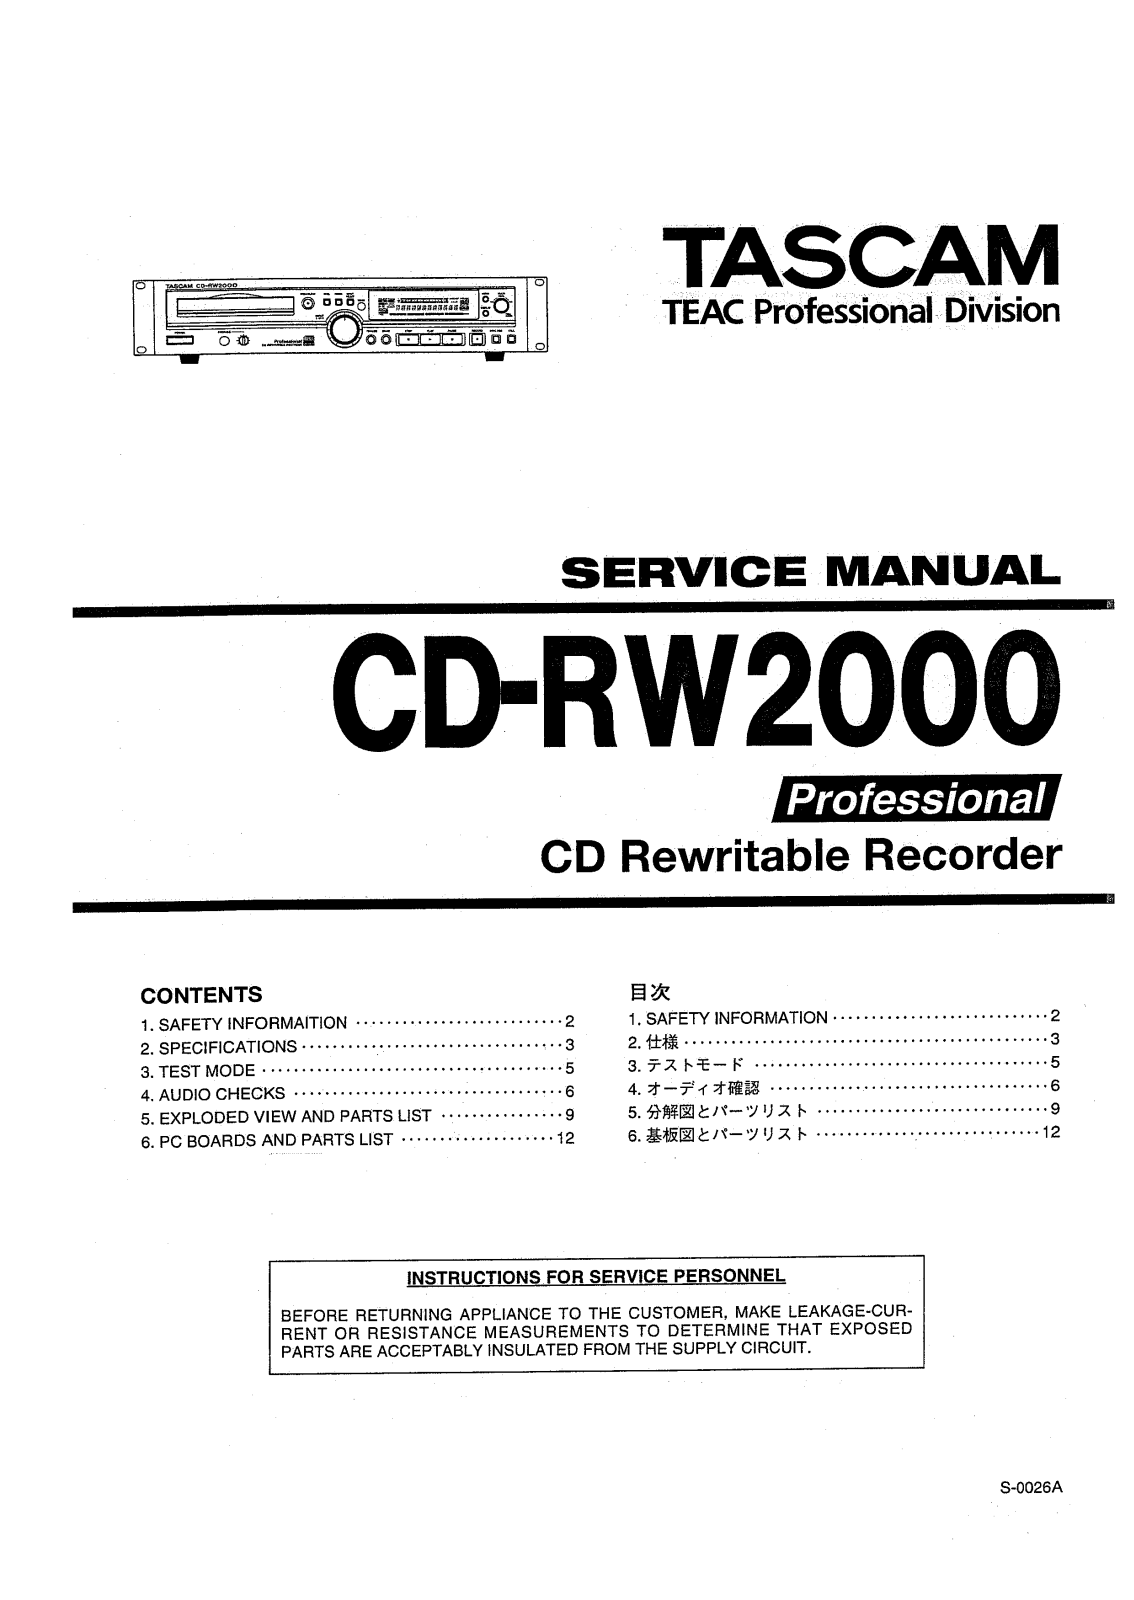 Tascam CD-RW-2000 Service Manual